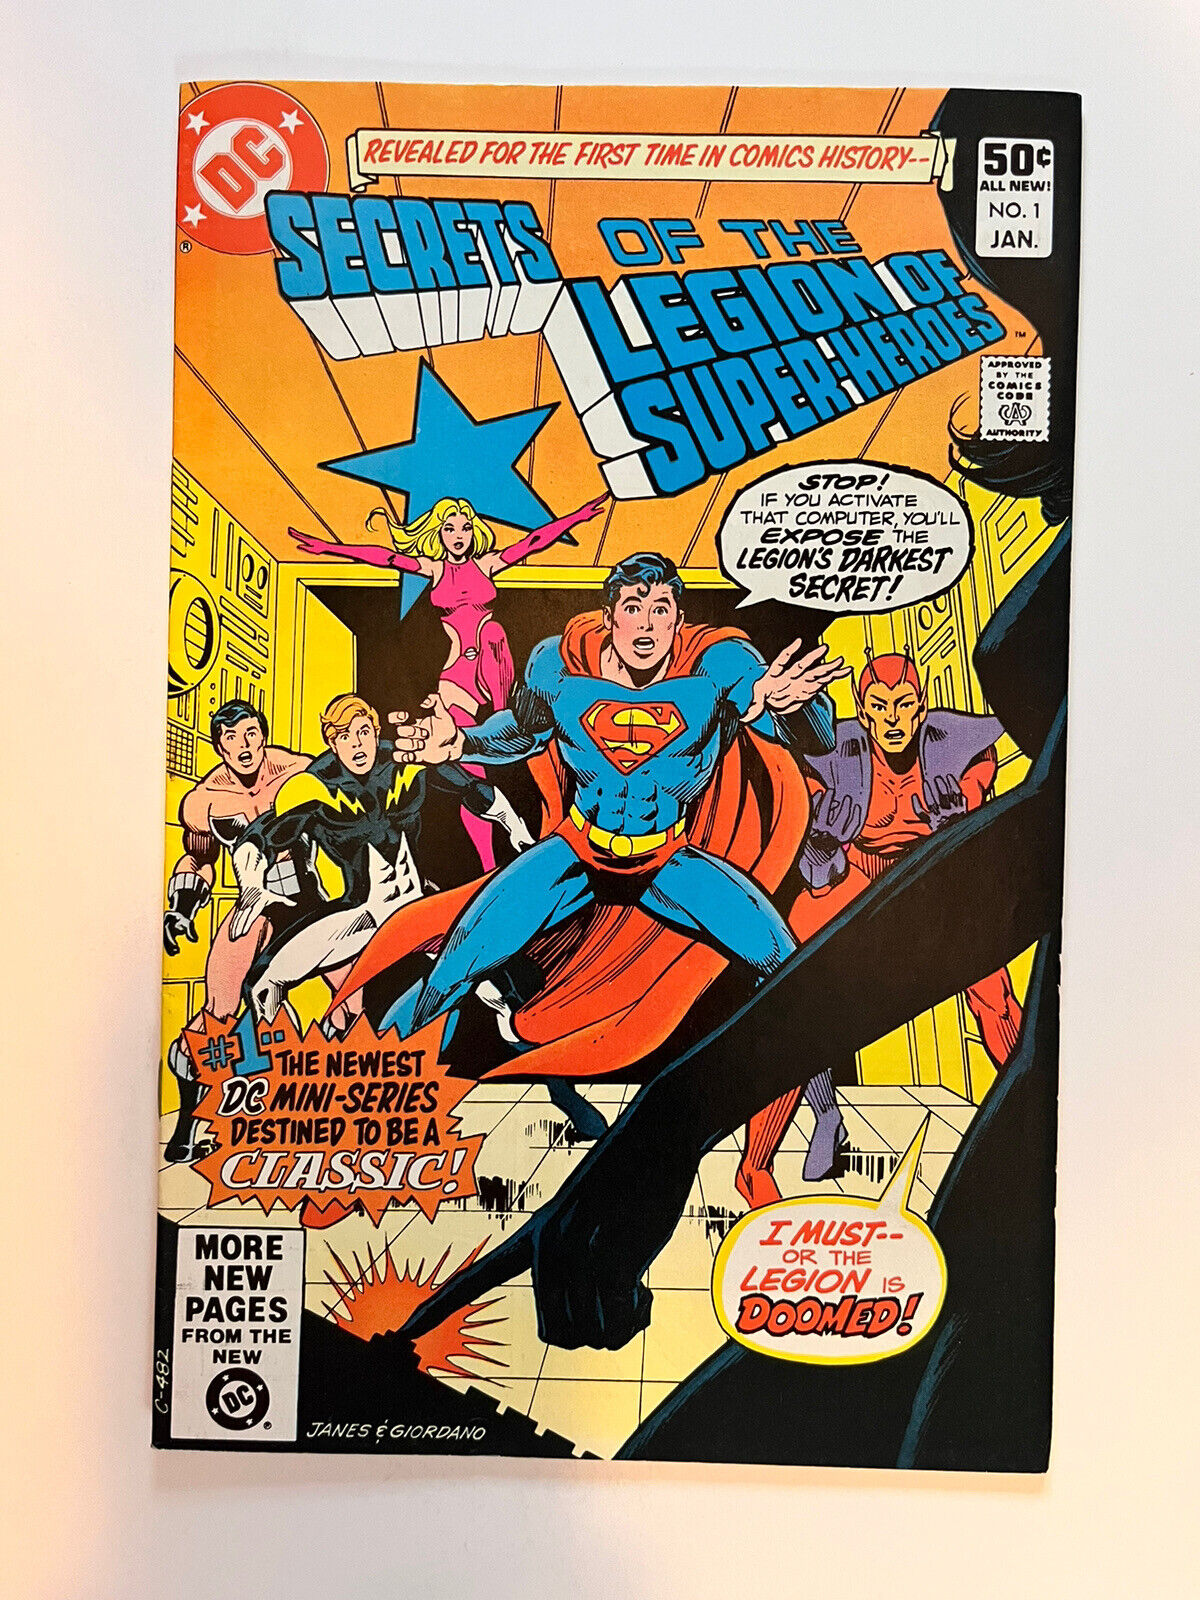 Secrets of the Legion of Superheroes #1/DC Comics, 1981